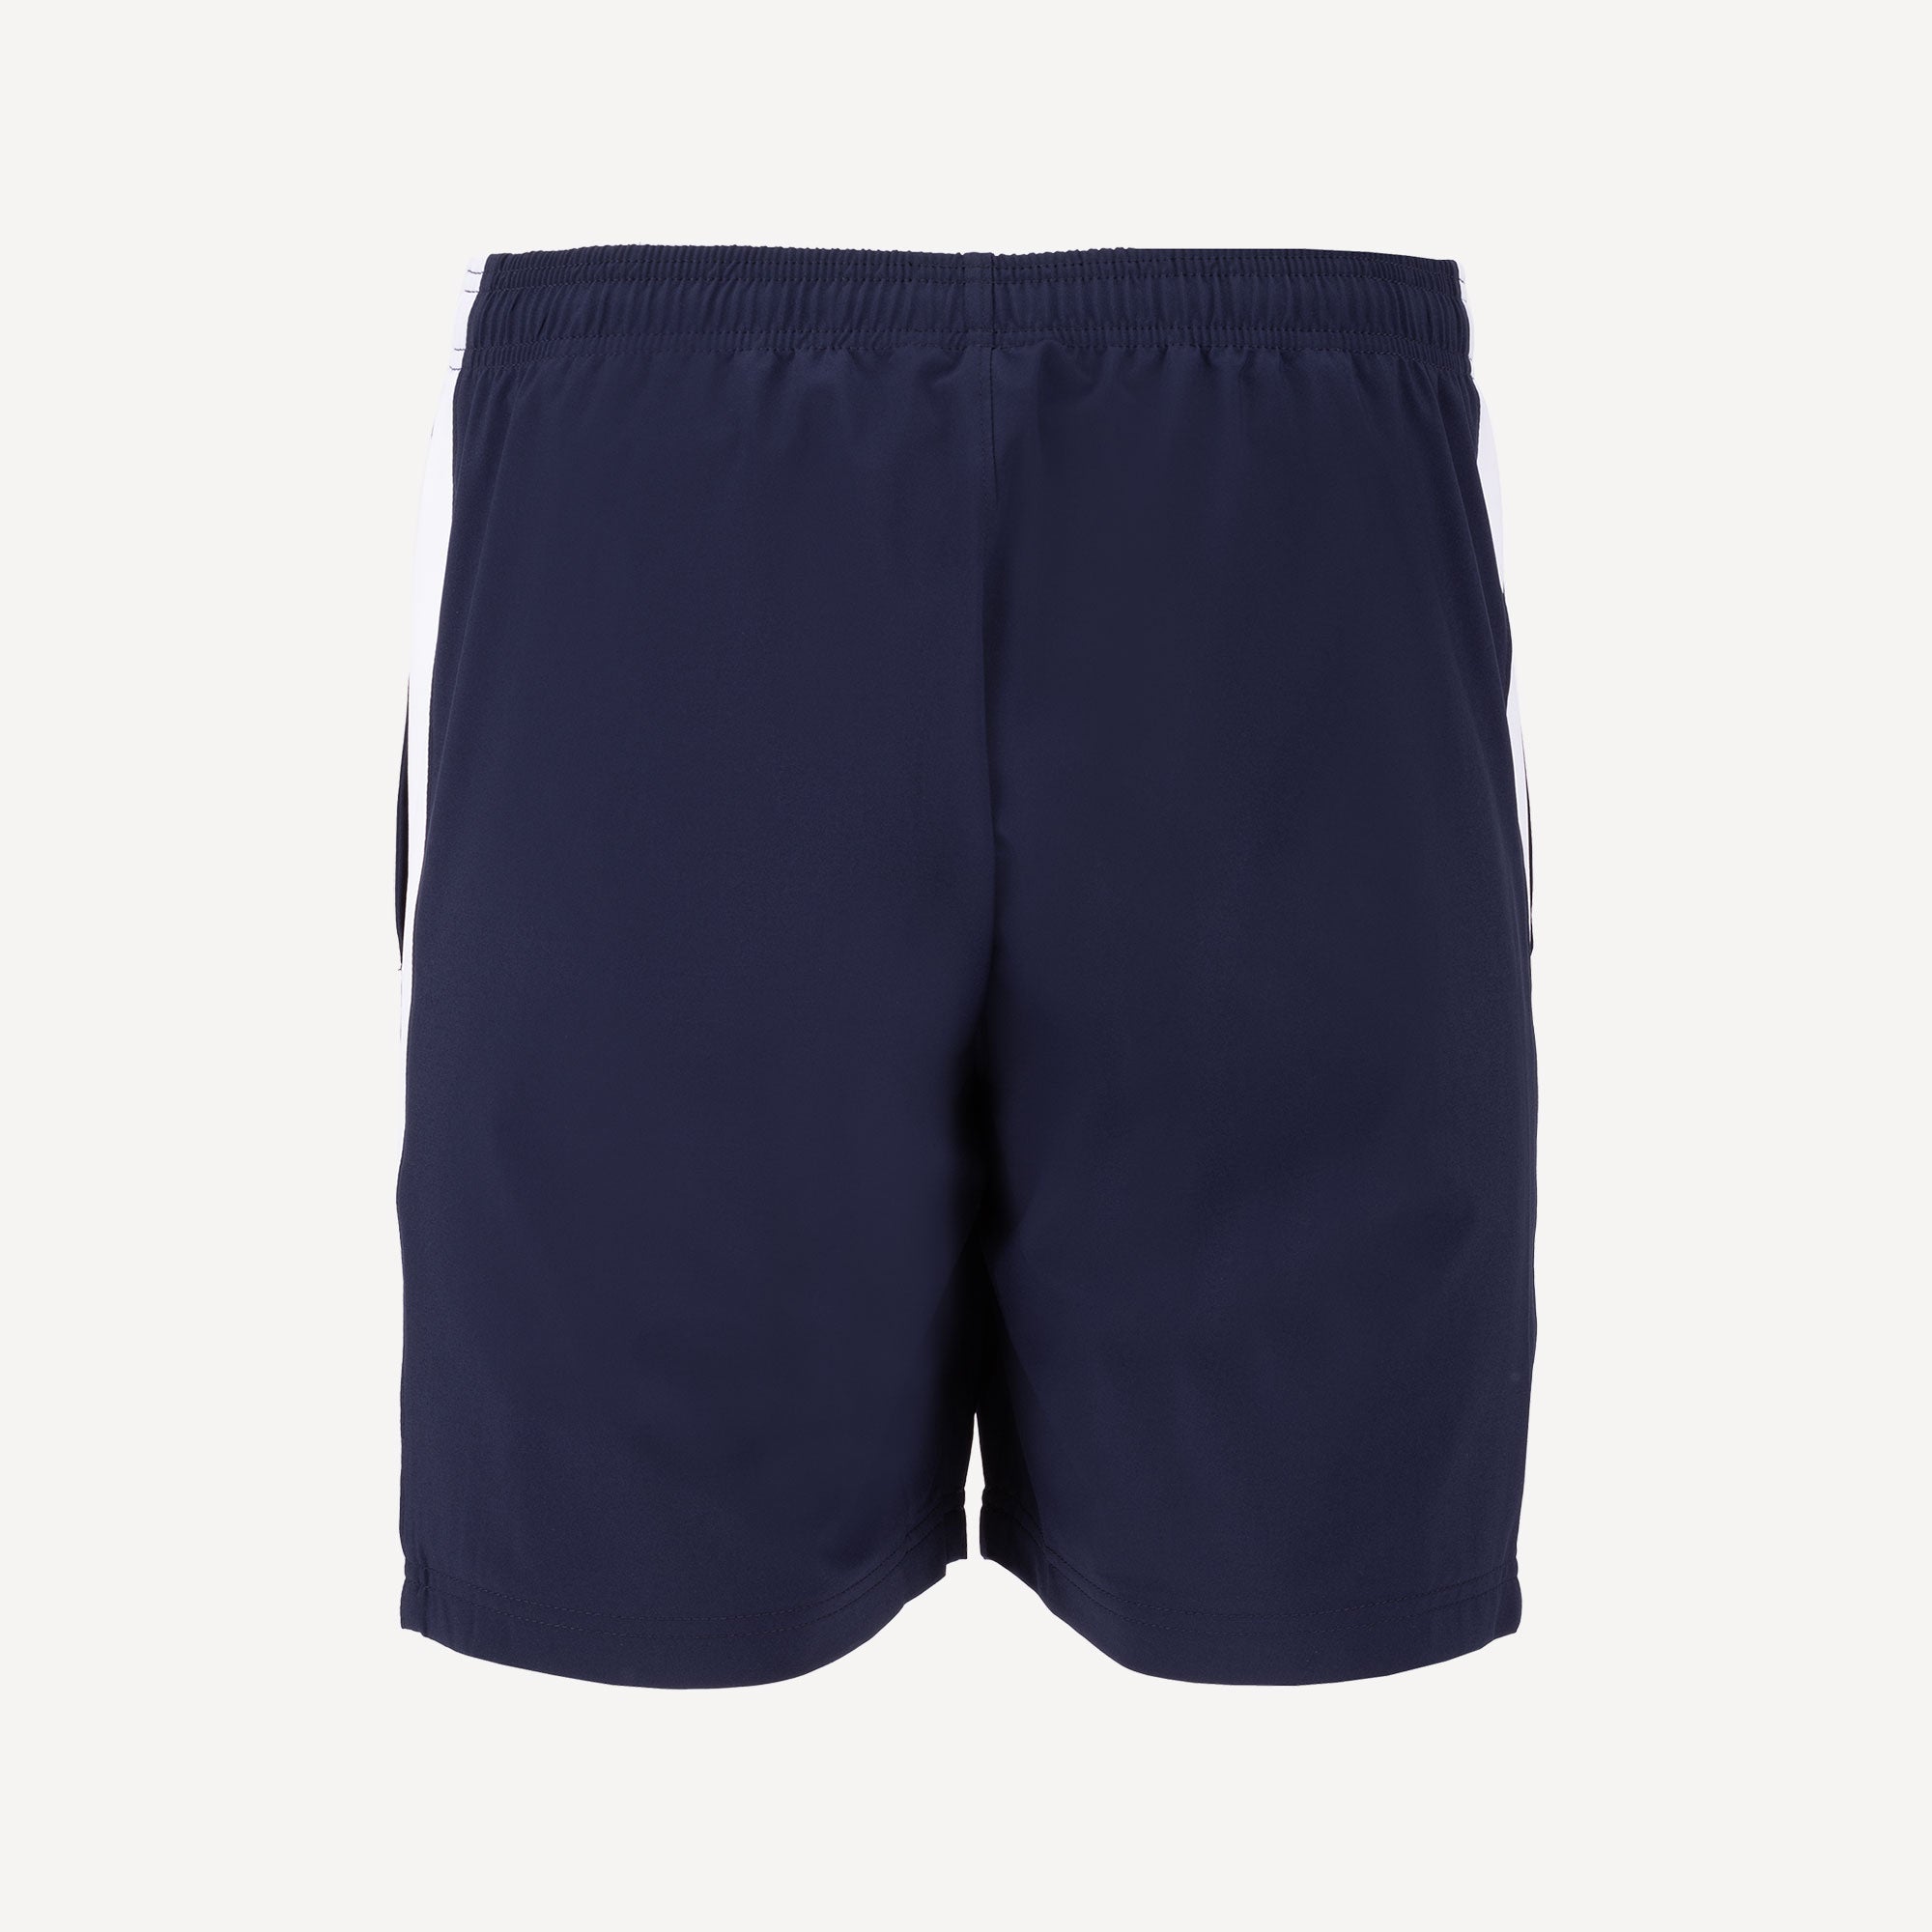 Fila Jakob Men's Tennis Shorts - Dark Blue (2)